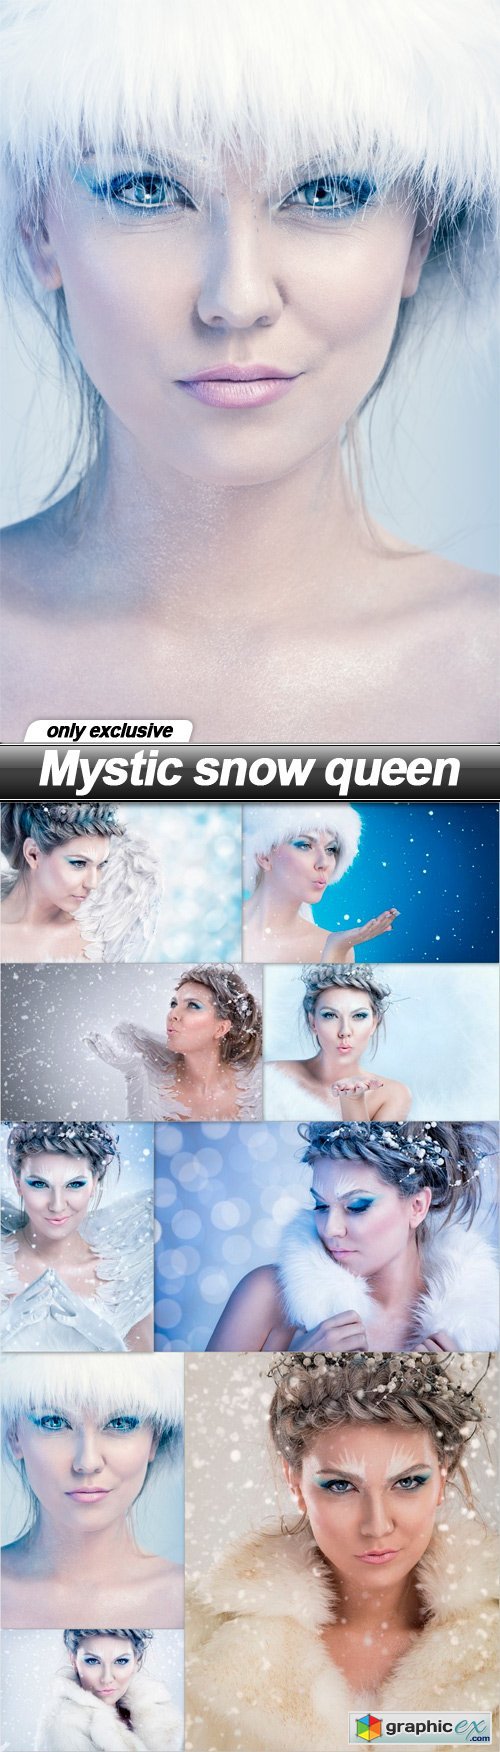 Mystic snow queen - 9 UHQ JPEG